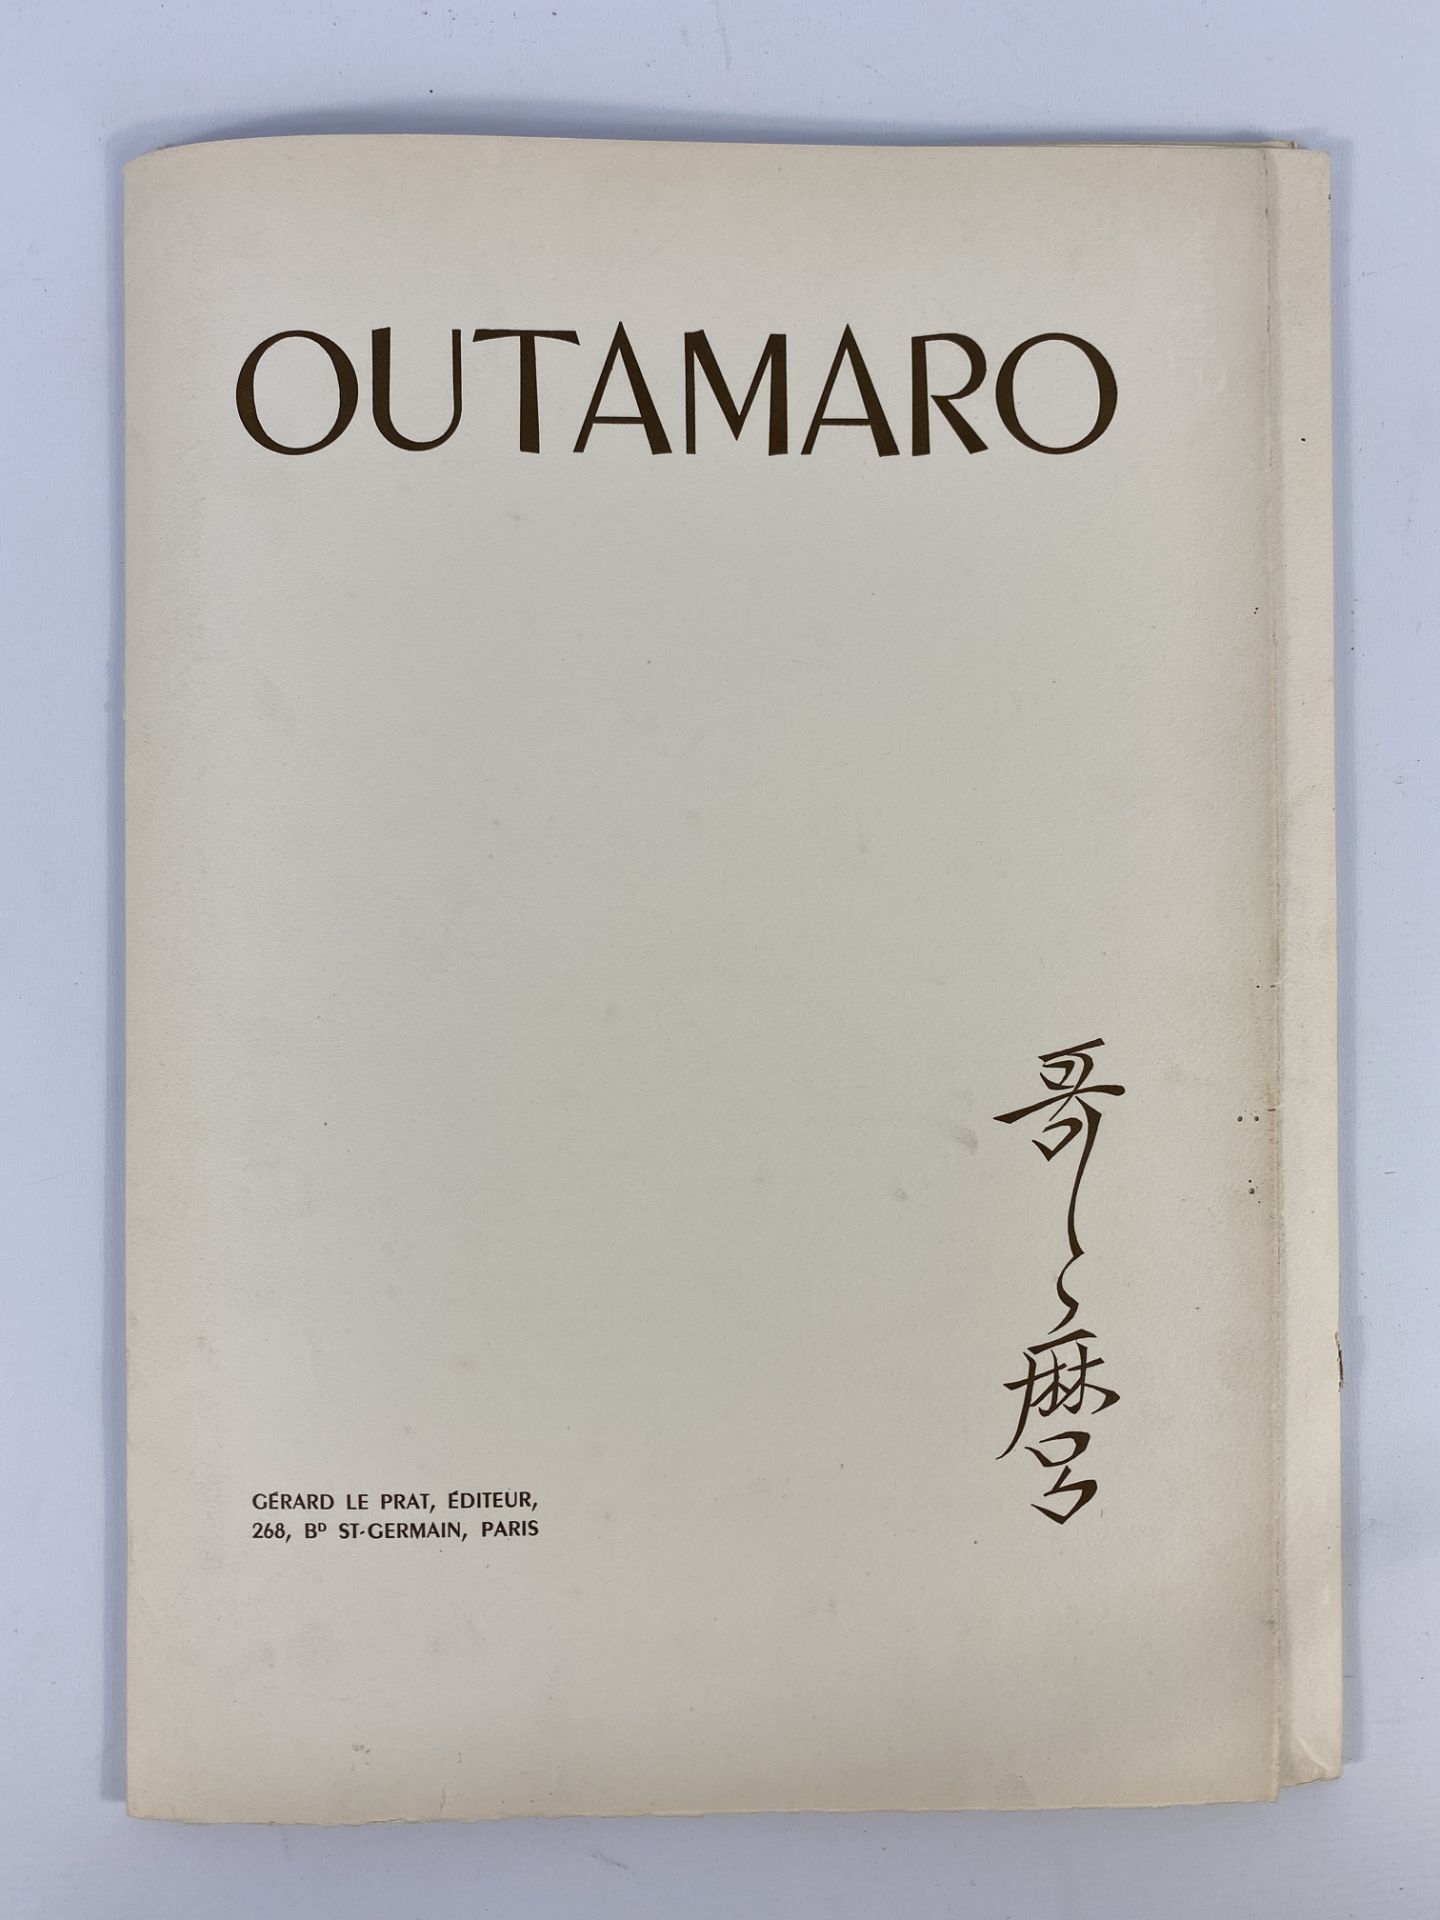 Outamaro (1752-1806)Set of 6 reproductions of Japanese printsGerard Le Prat, Paris, 1955.